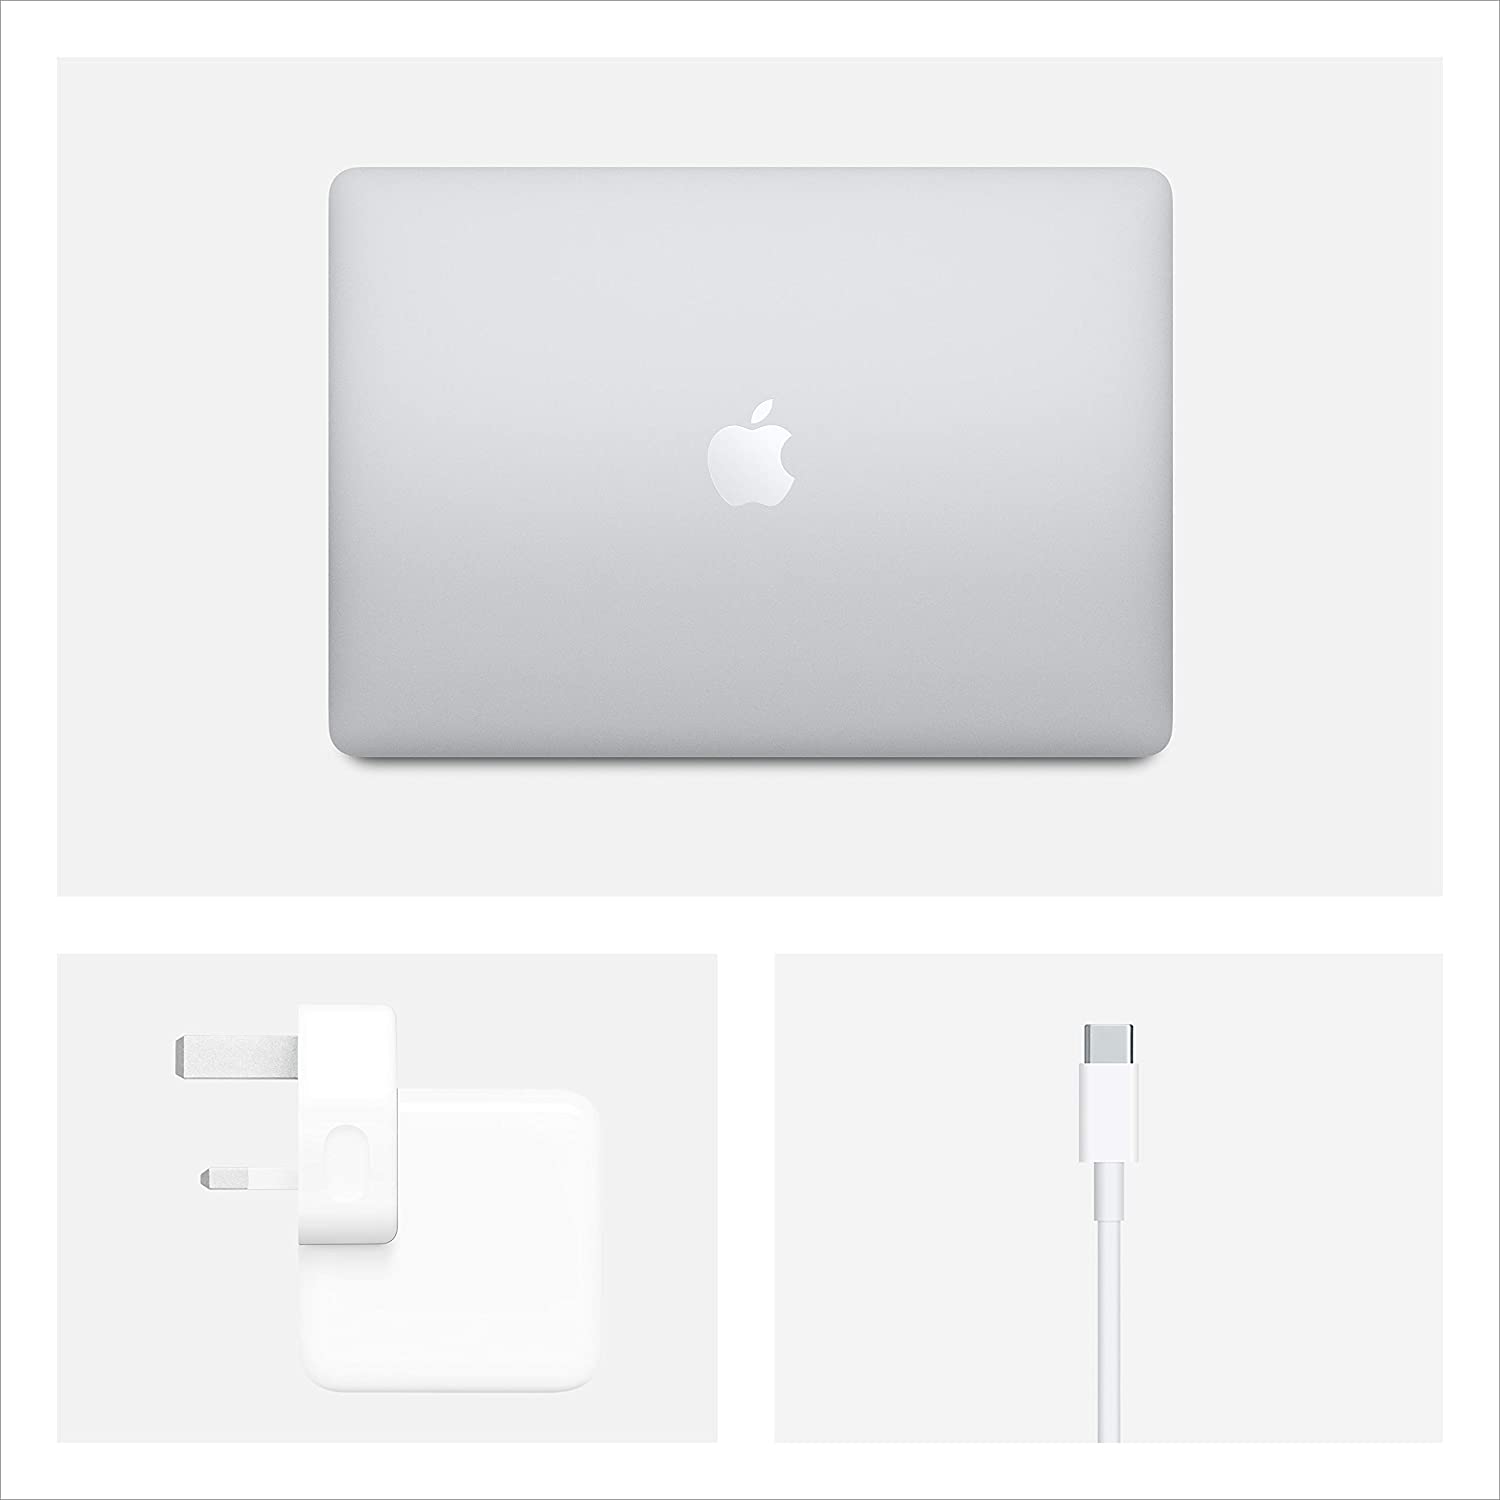 Apple MacBook Air (13-inch, 1.1GHz Dual-core 10th-Generation Intel Core i3 Processor, 8GB RAM, 256GB Storage) - Silver